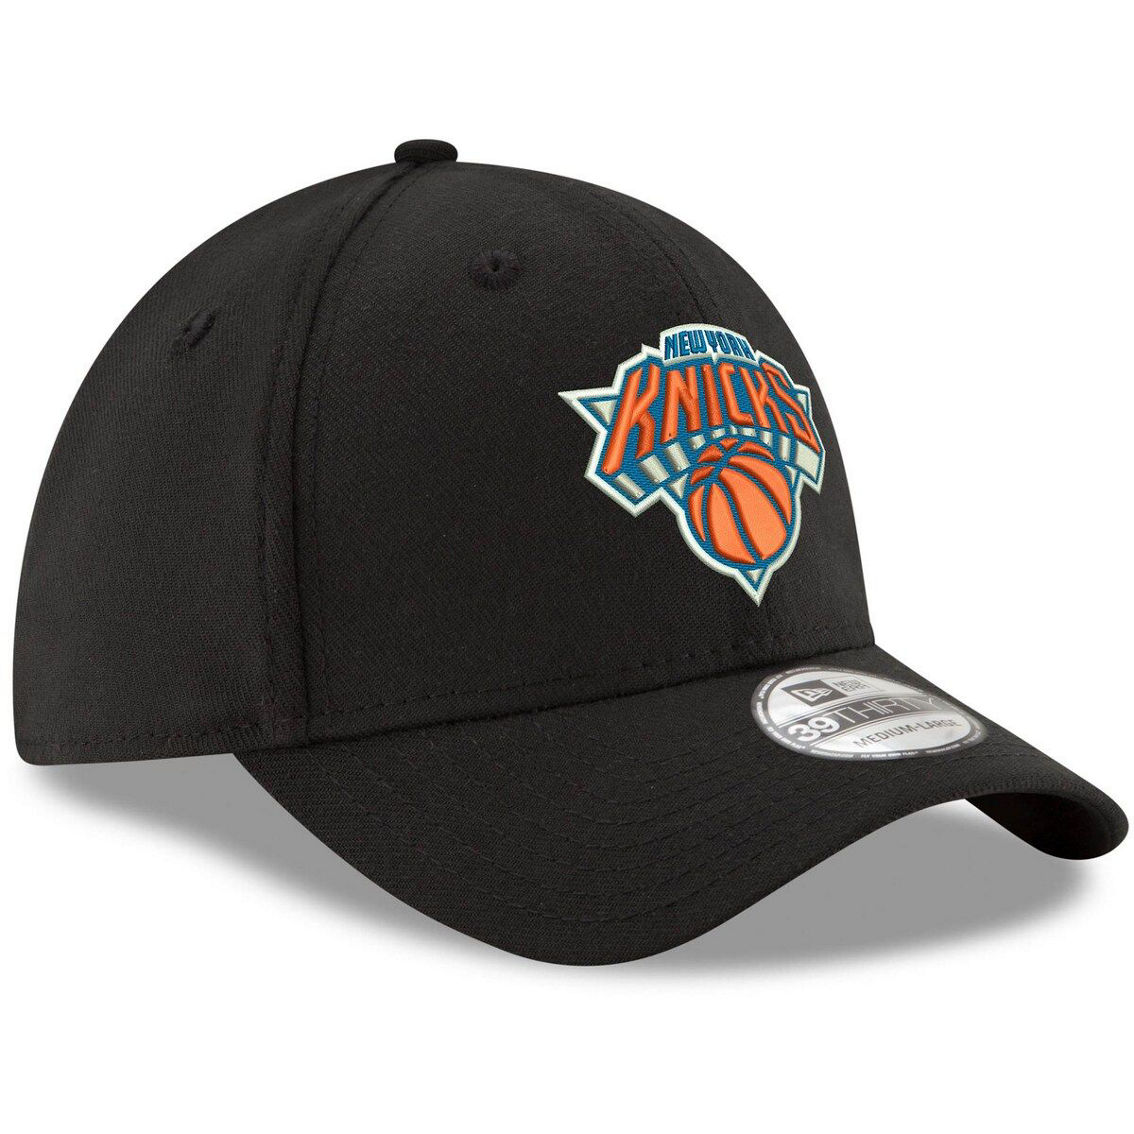 New Era Men's Black New York Knicks Official Team Color 39THIRTY Flex Hat - Image 4 of 4